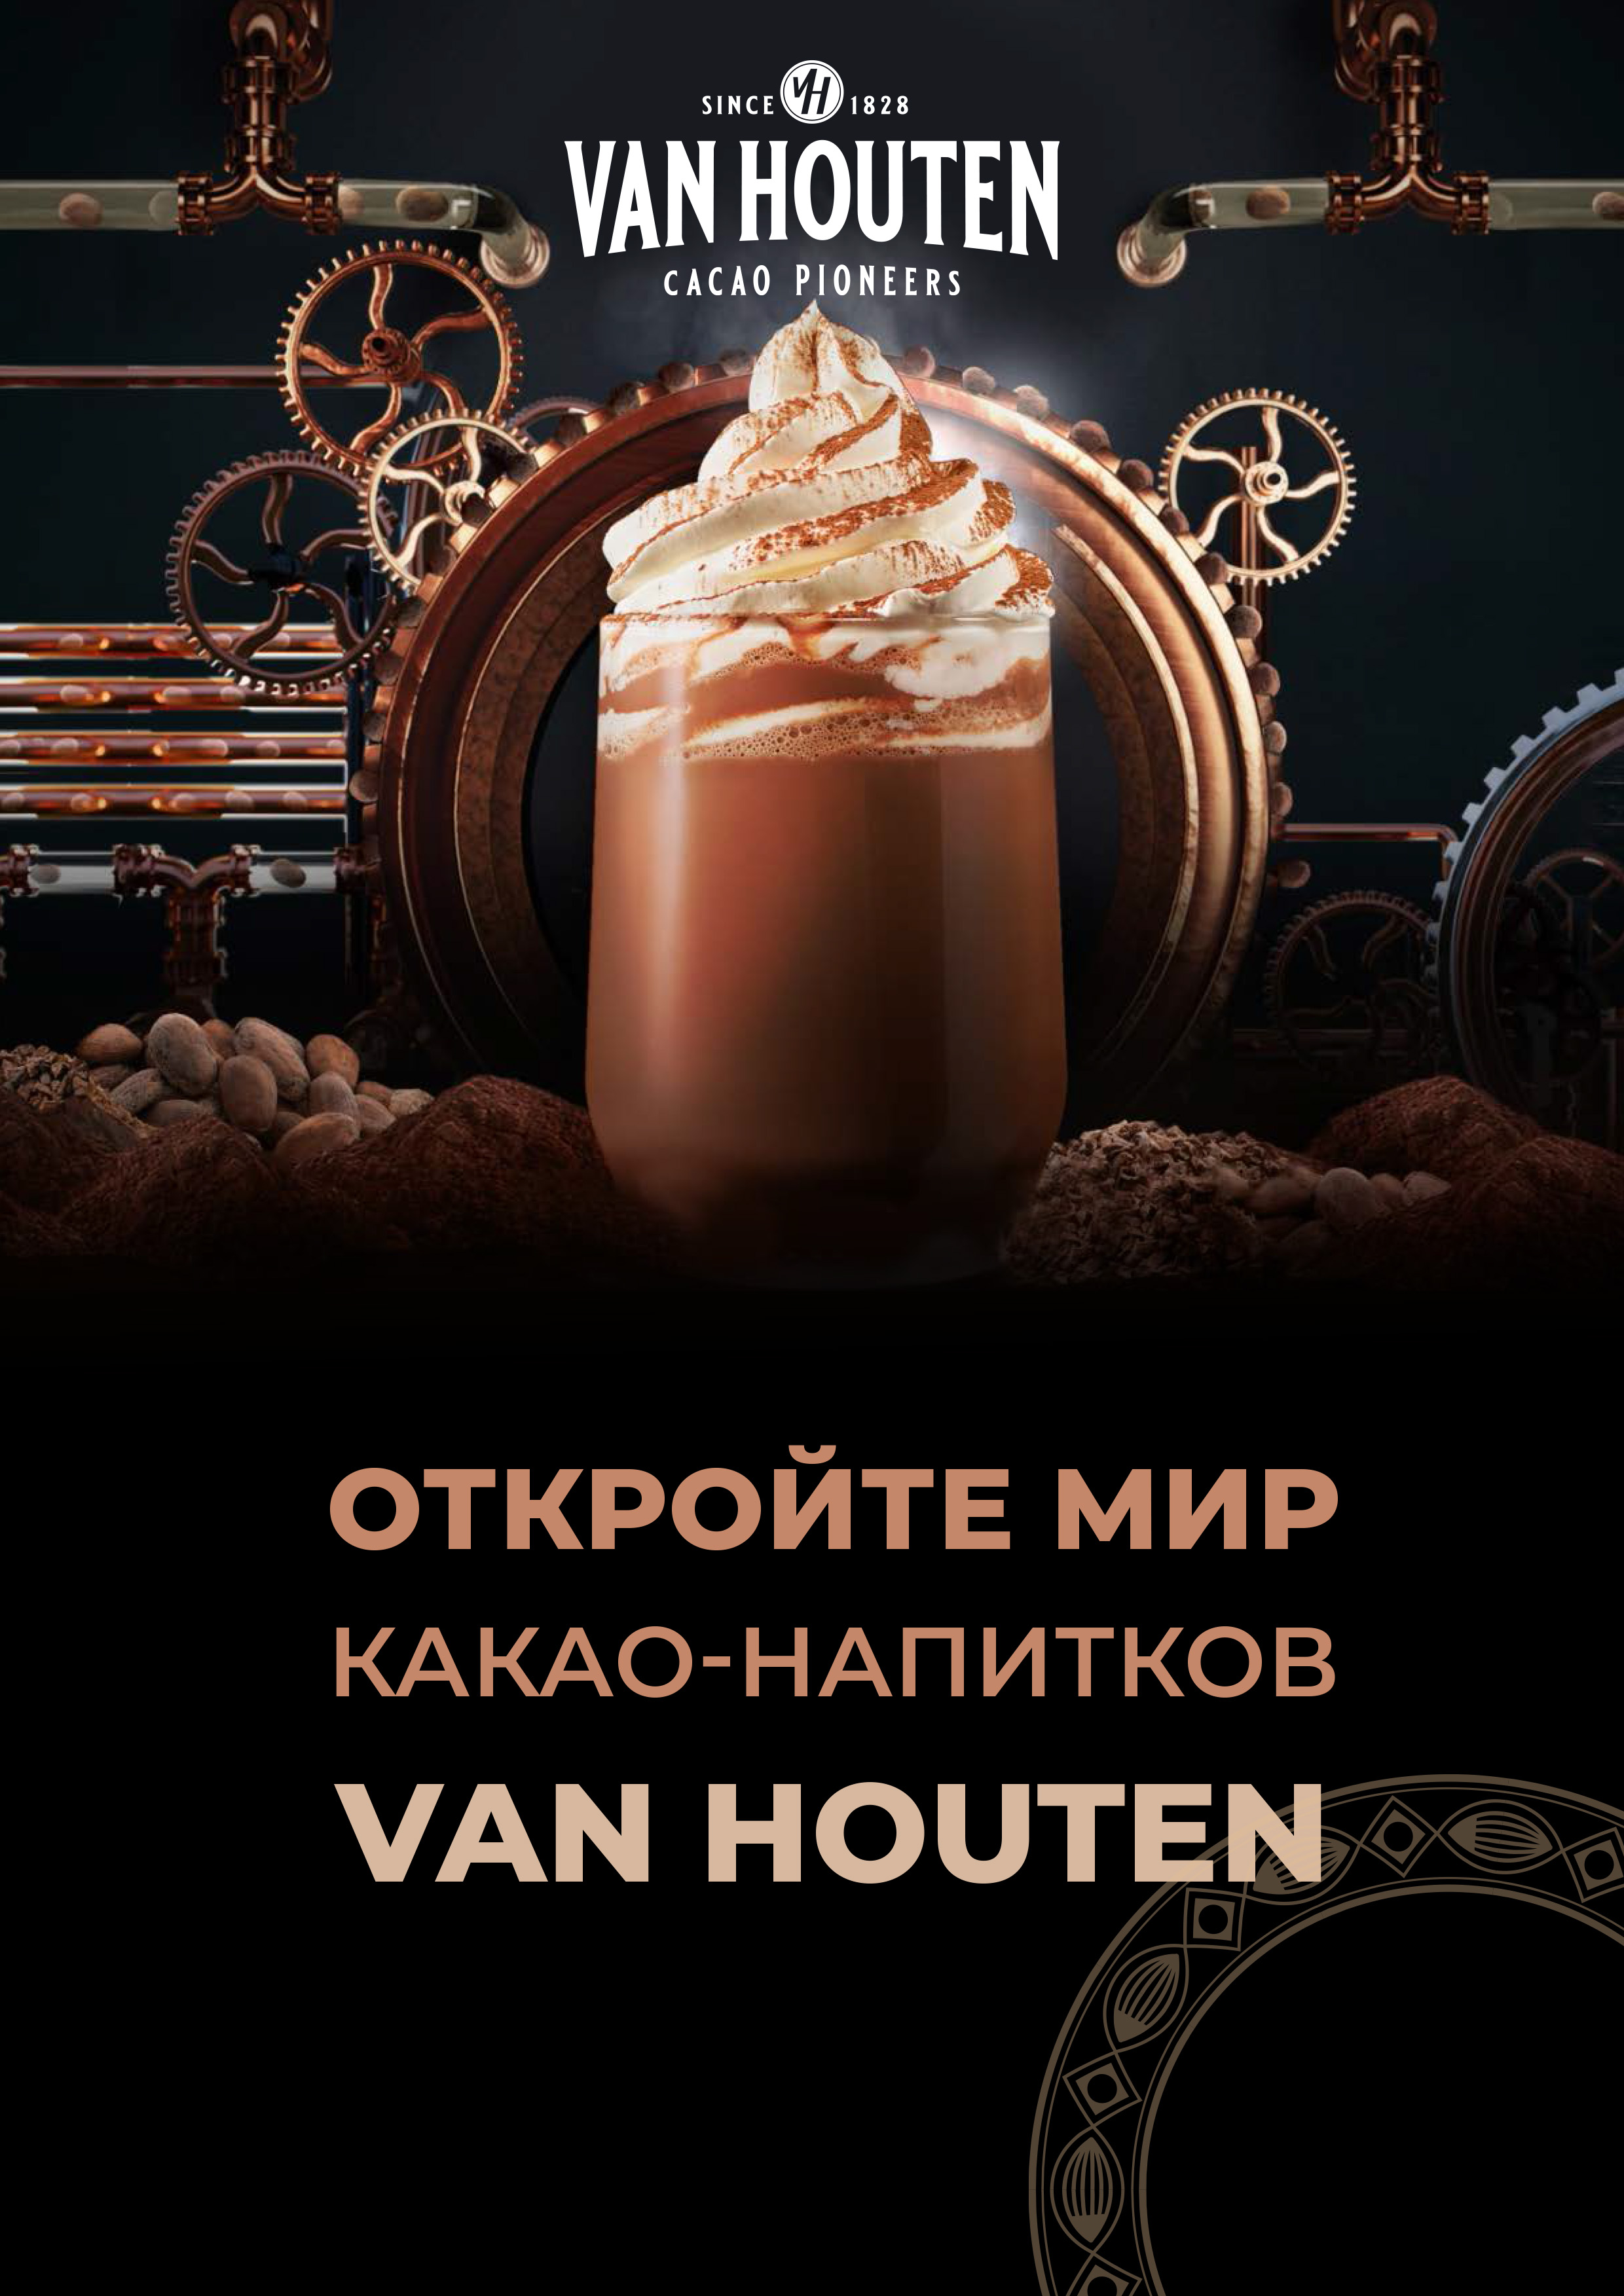 Мир шоколадных напитков VAN HOUTEN